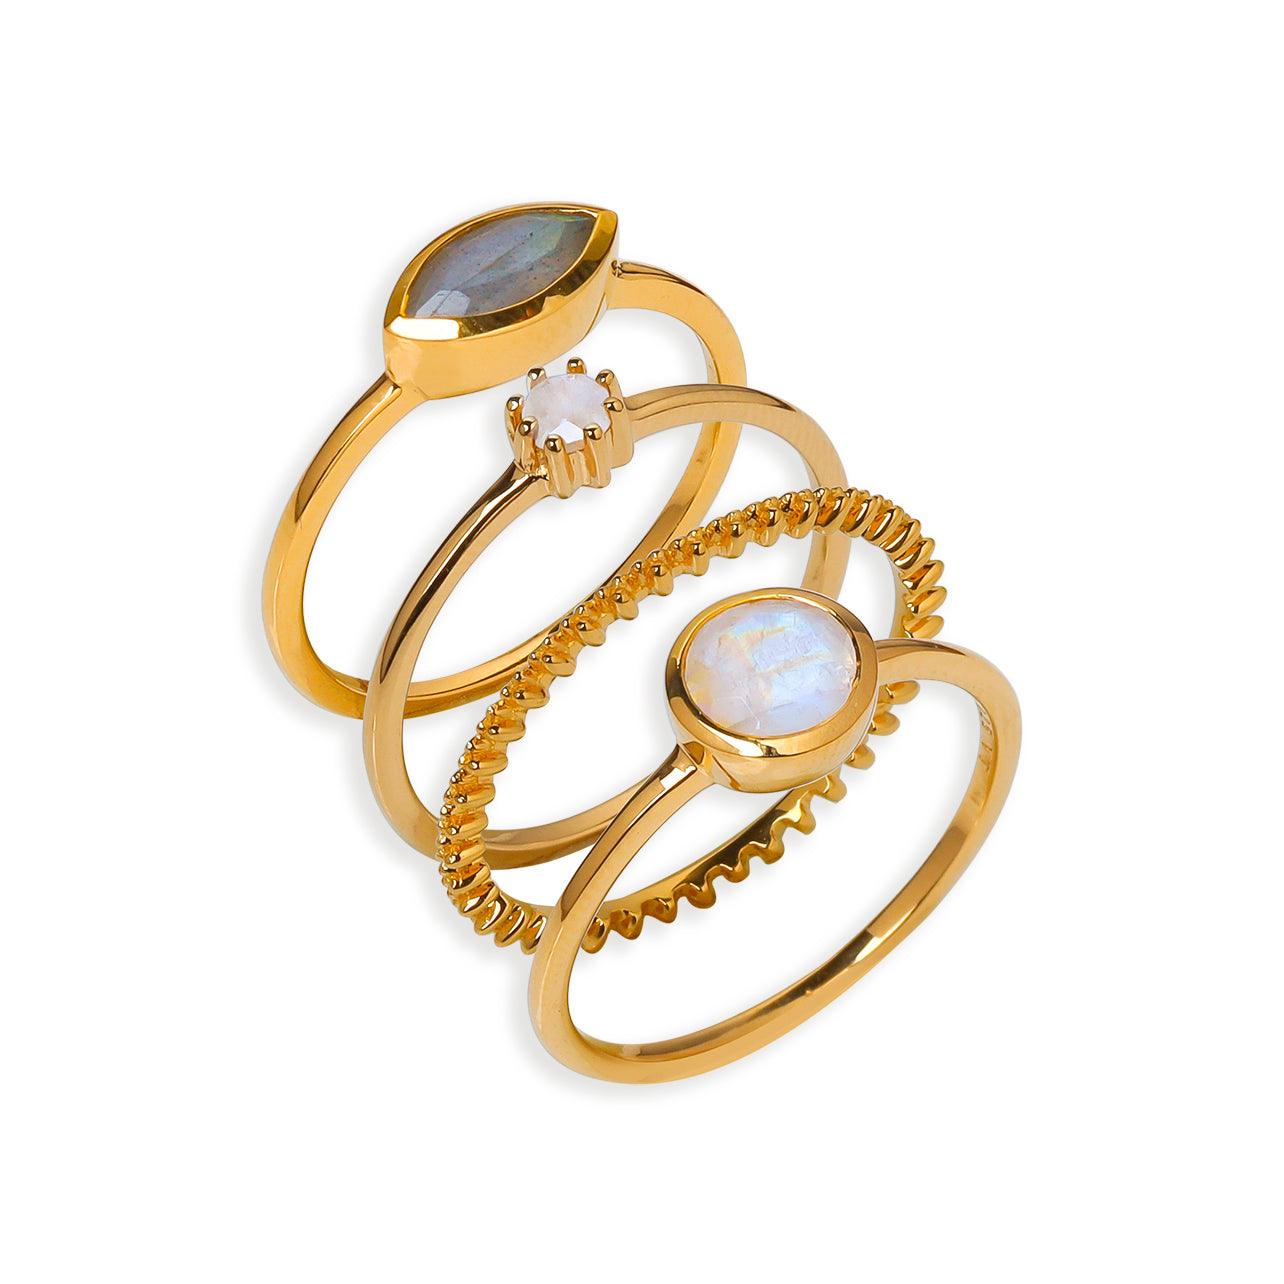 Moonstone Labradorite Love Ring Gold Over Silver Stackable Rings Set - YoTreasure